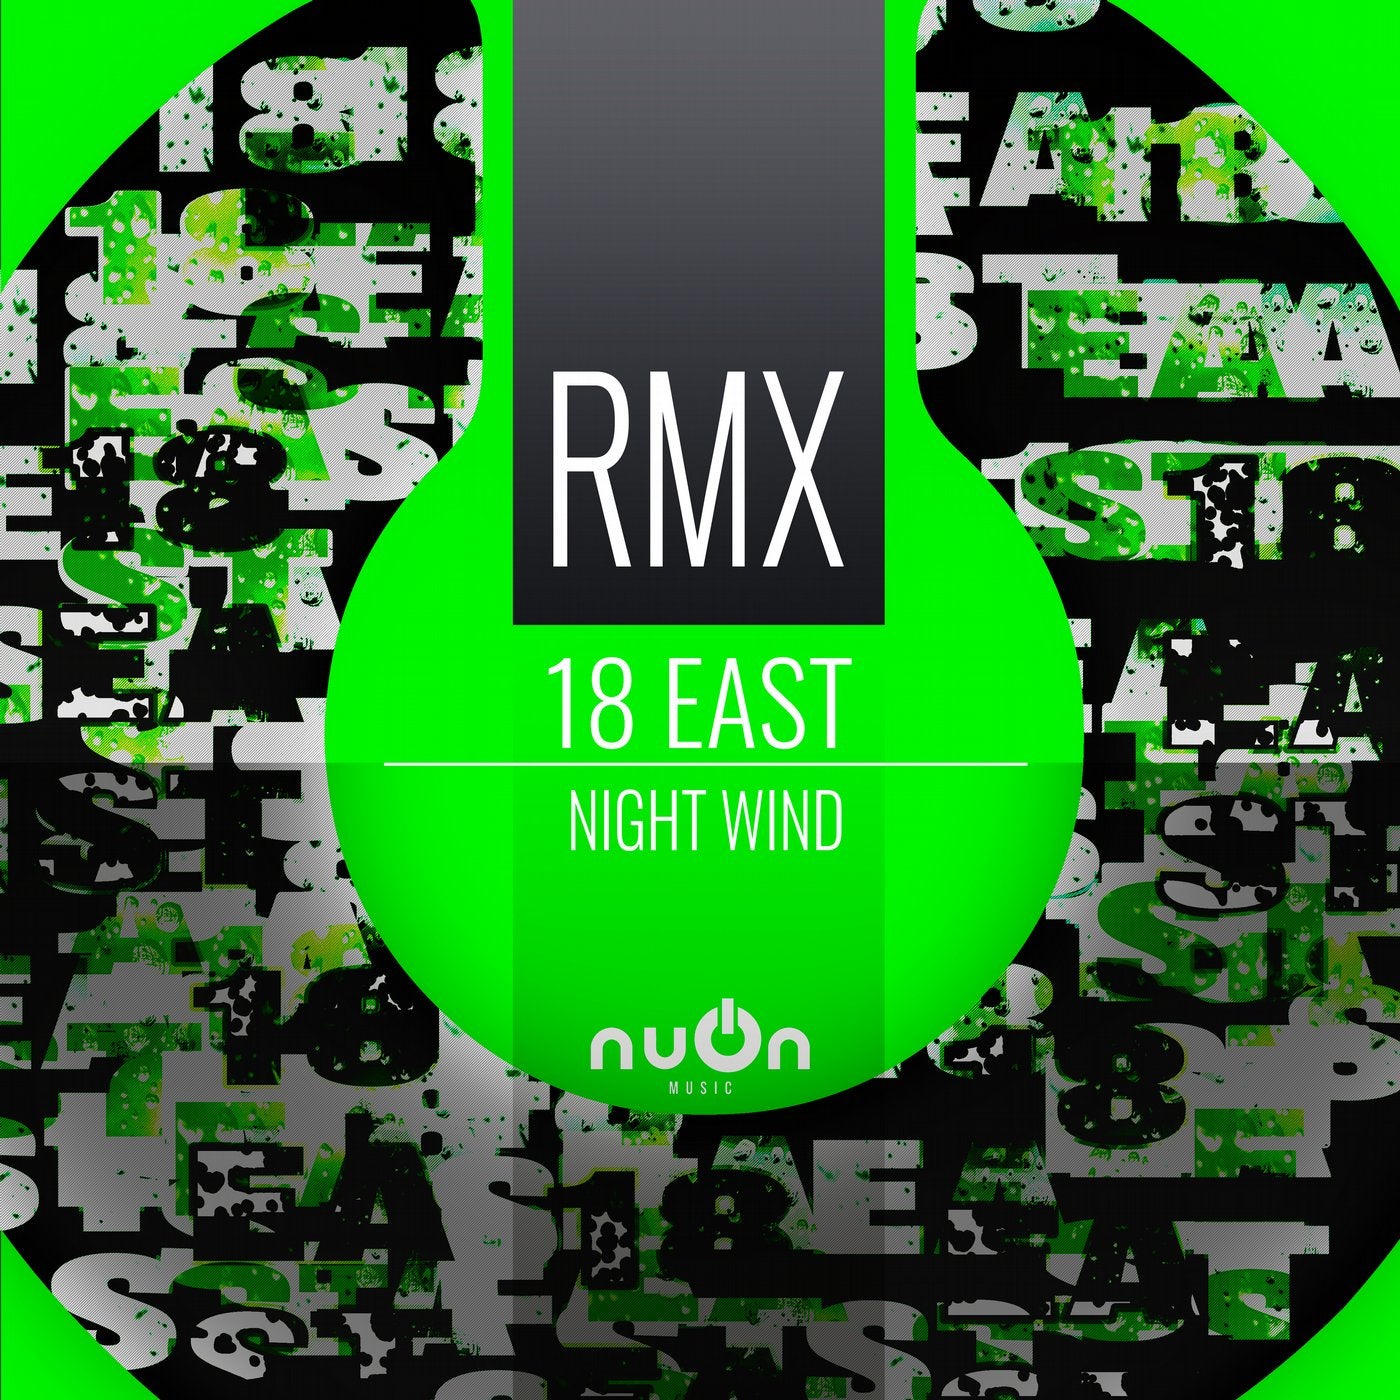 Night Wind RMX